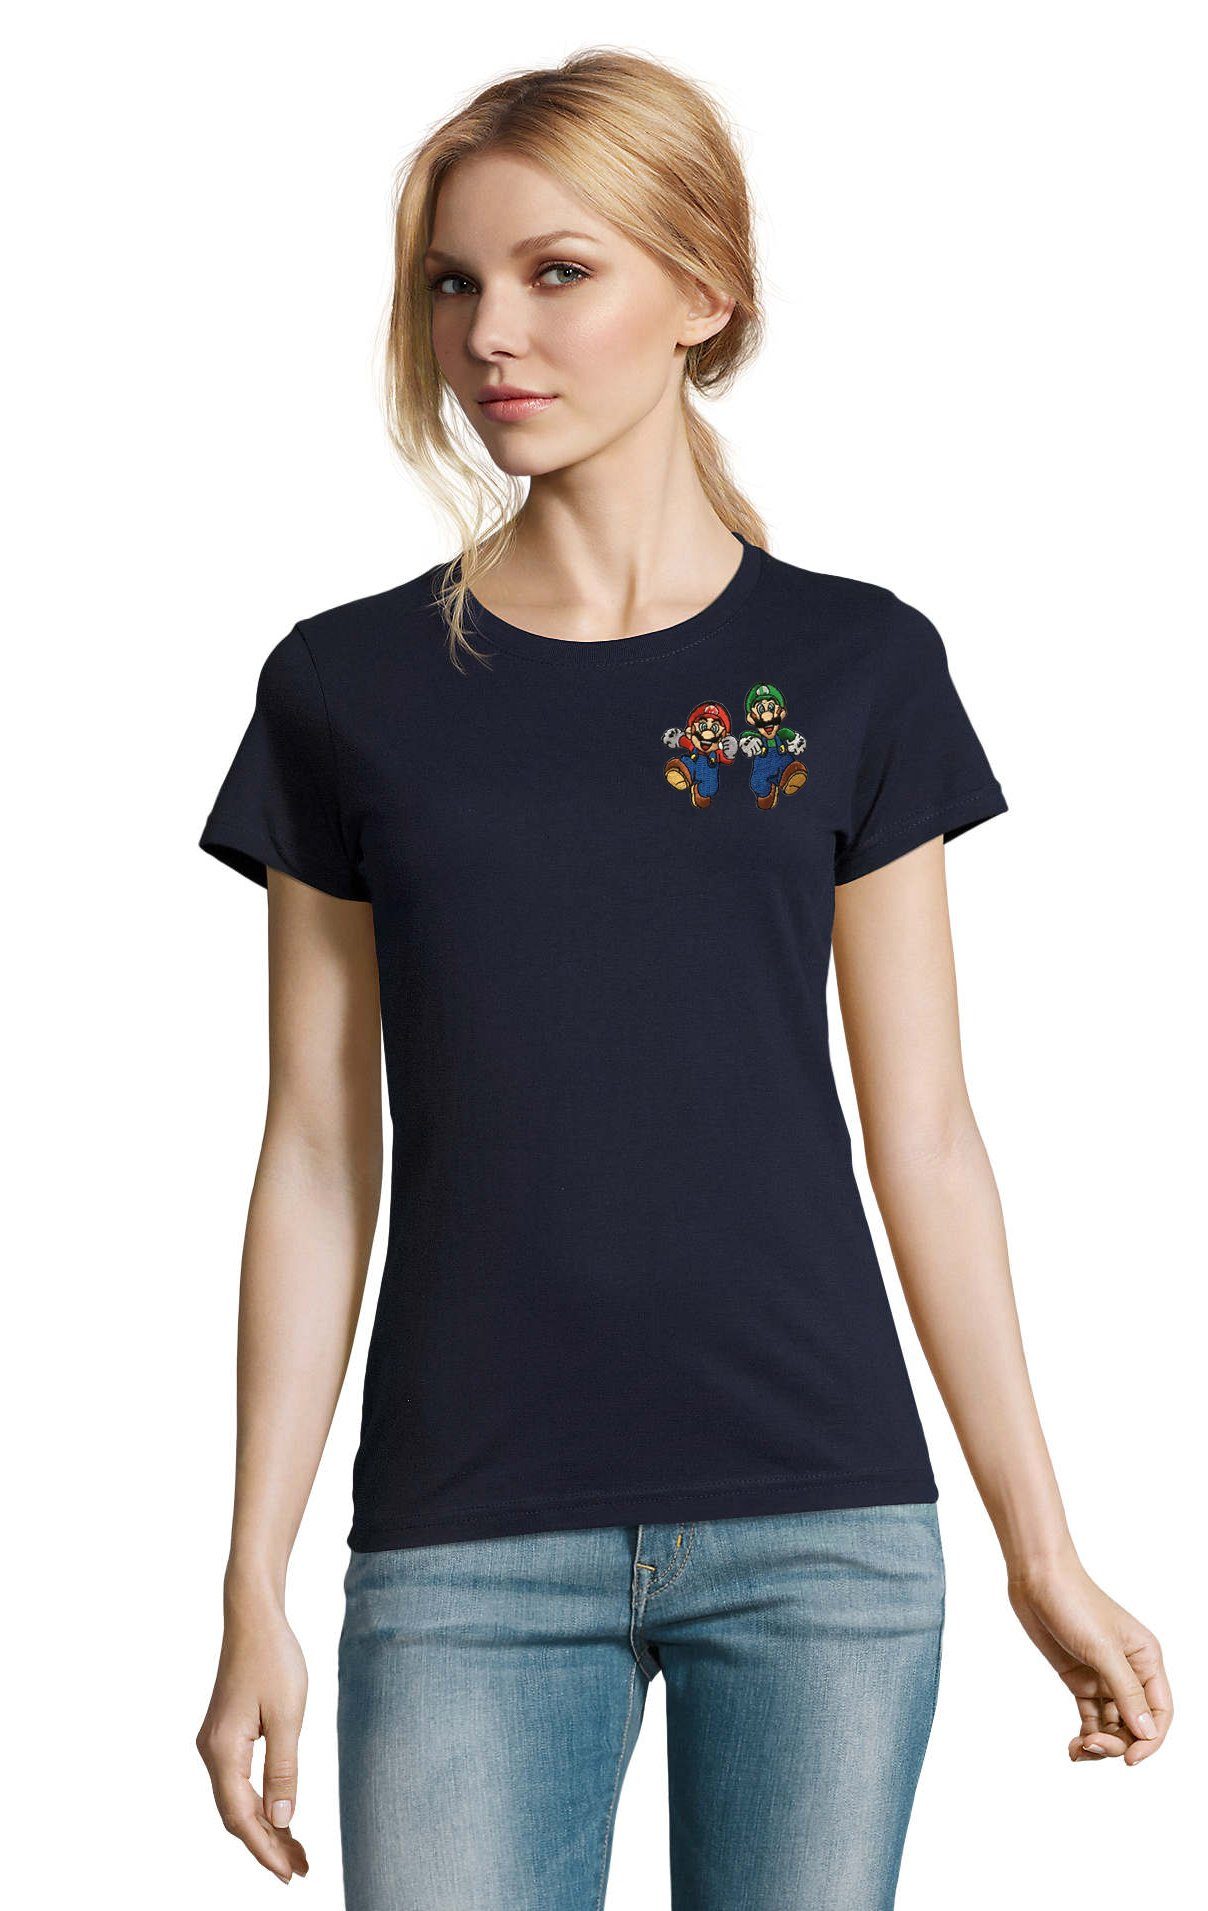 Blondie & Mario Brownie Gaming bestickt Stick Bowser Yoshi Nintendo Damen Navyblau T-Shirt & Luigi Brust